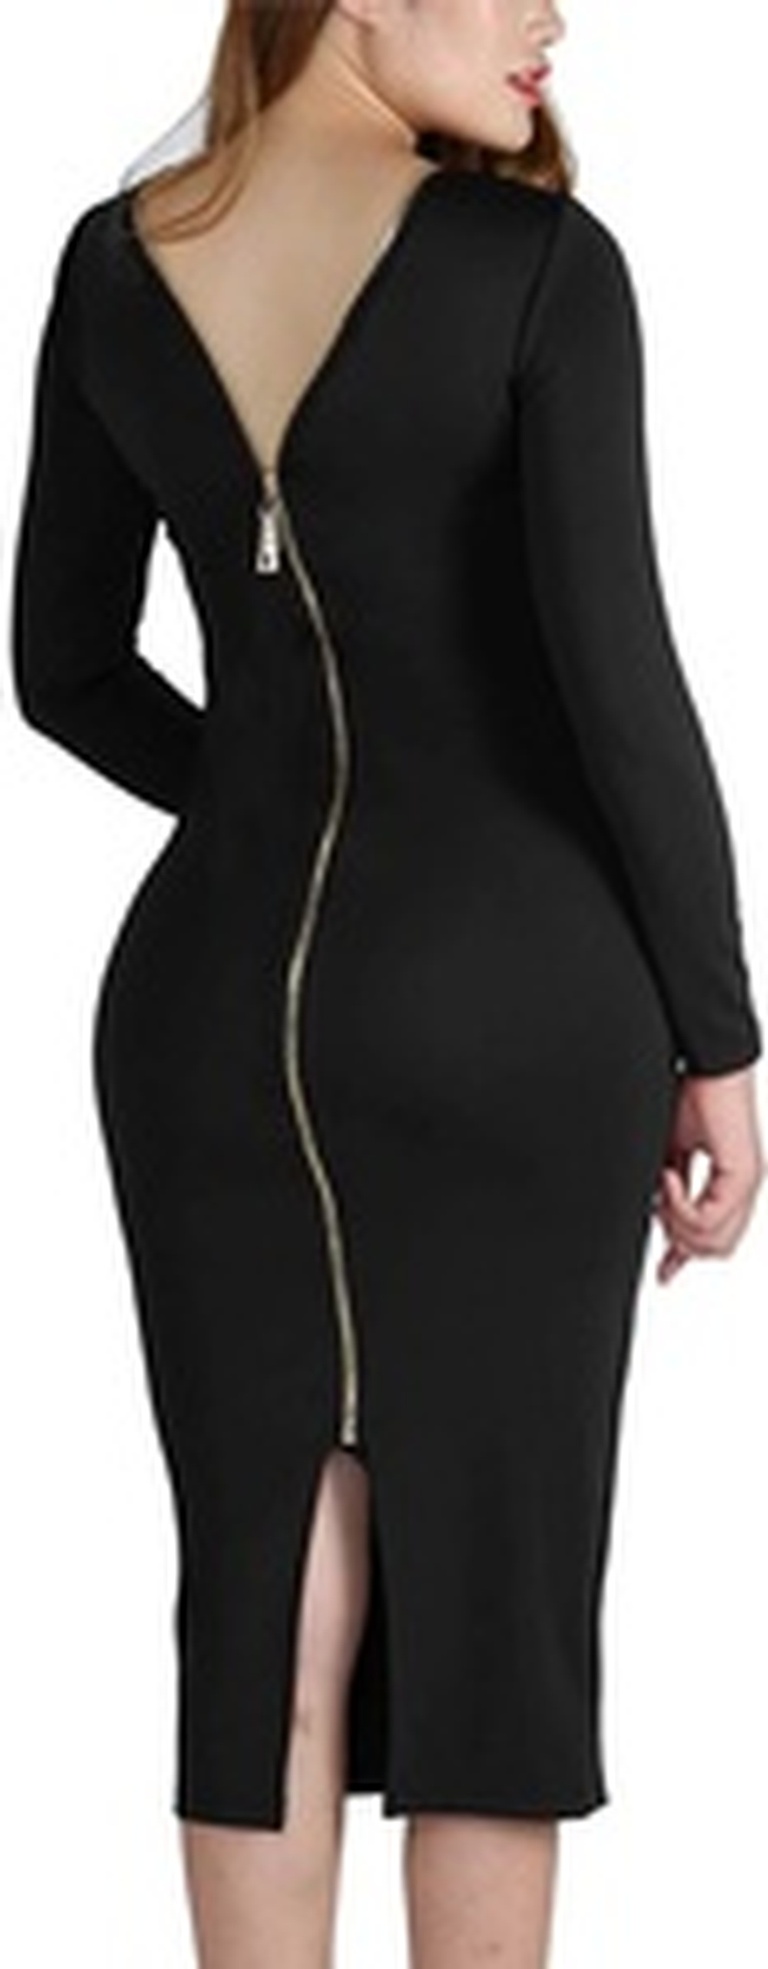 YMING Women's Long Sleeve Bodycon Club Zipper Back Plus Size Sexy Long Dress at Sopro Market - Online Fashion Store Canada